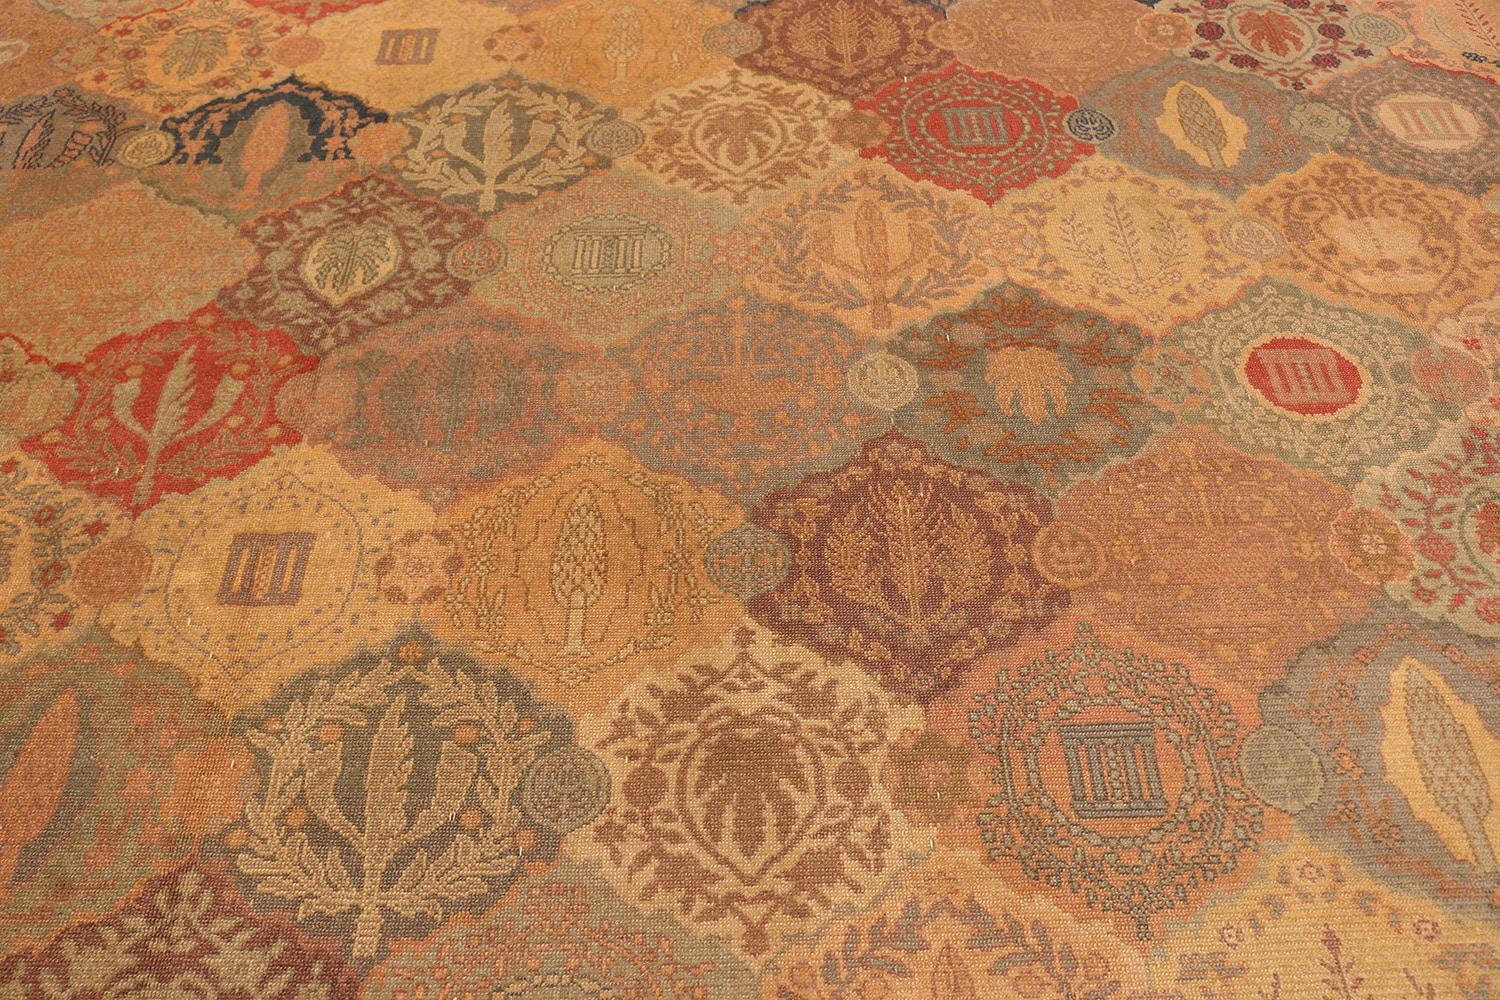 Antique oversized Israeli Bezalel carpet, origin: Israel, circa: first quarter of the 20th century. Size: 15 ft 9 in x 17 ft 10 in (4.8 m x 5.44 m)

